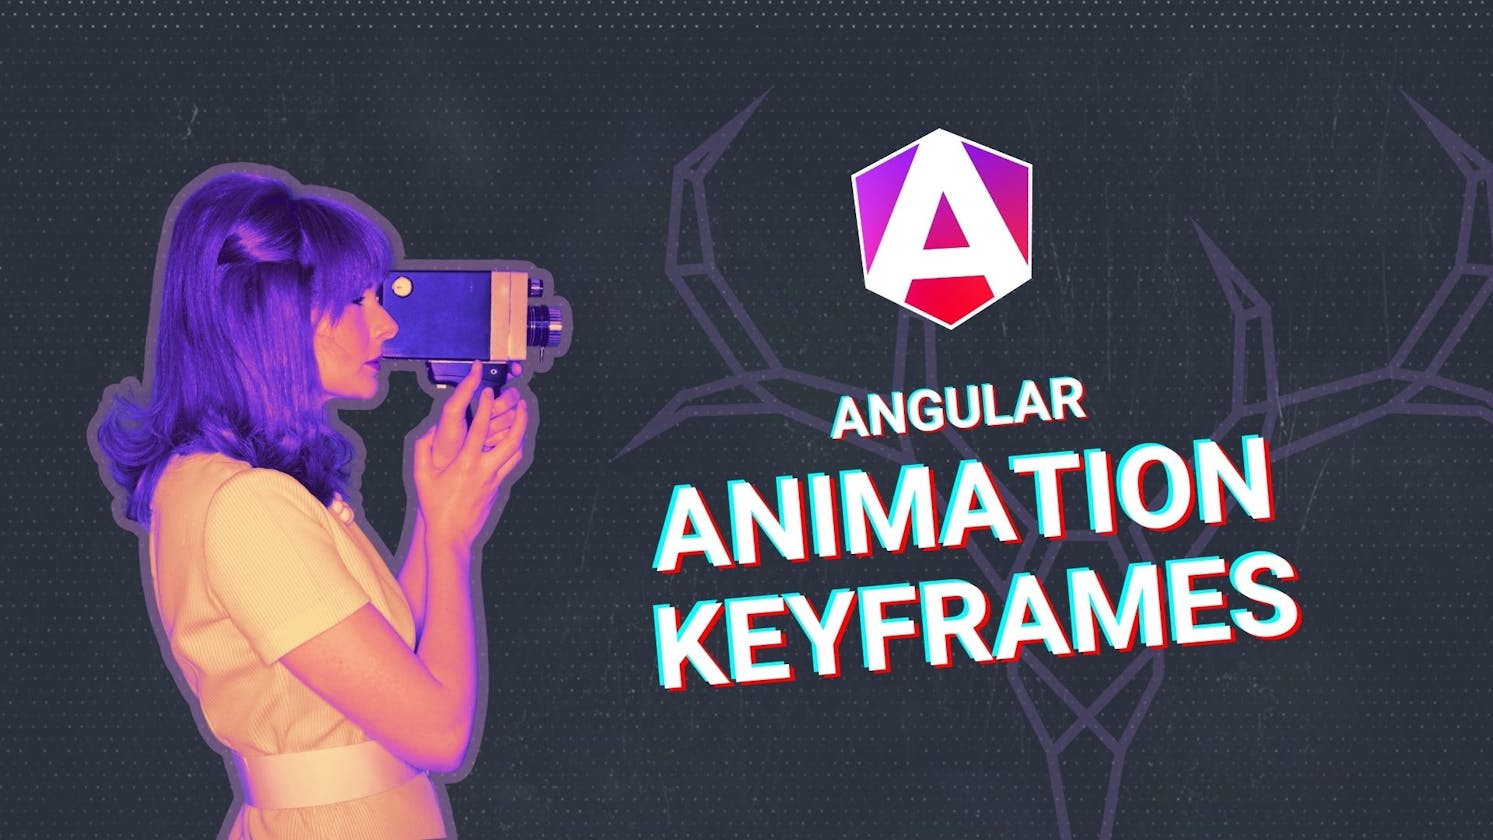 Angular Animations Tutorial: The Keyframes Function